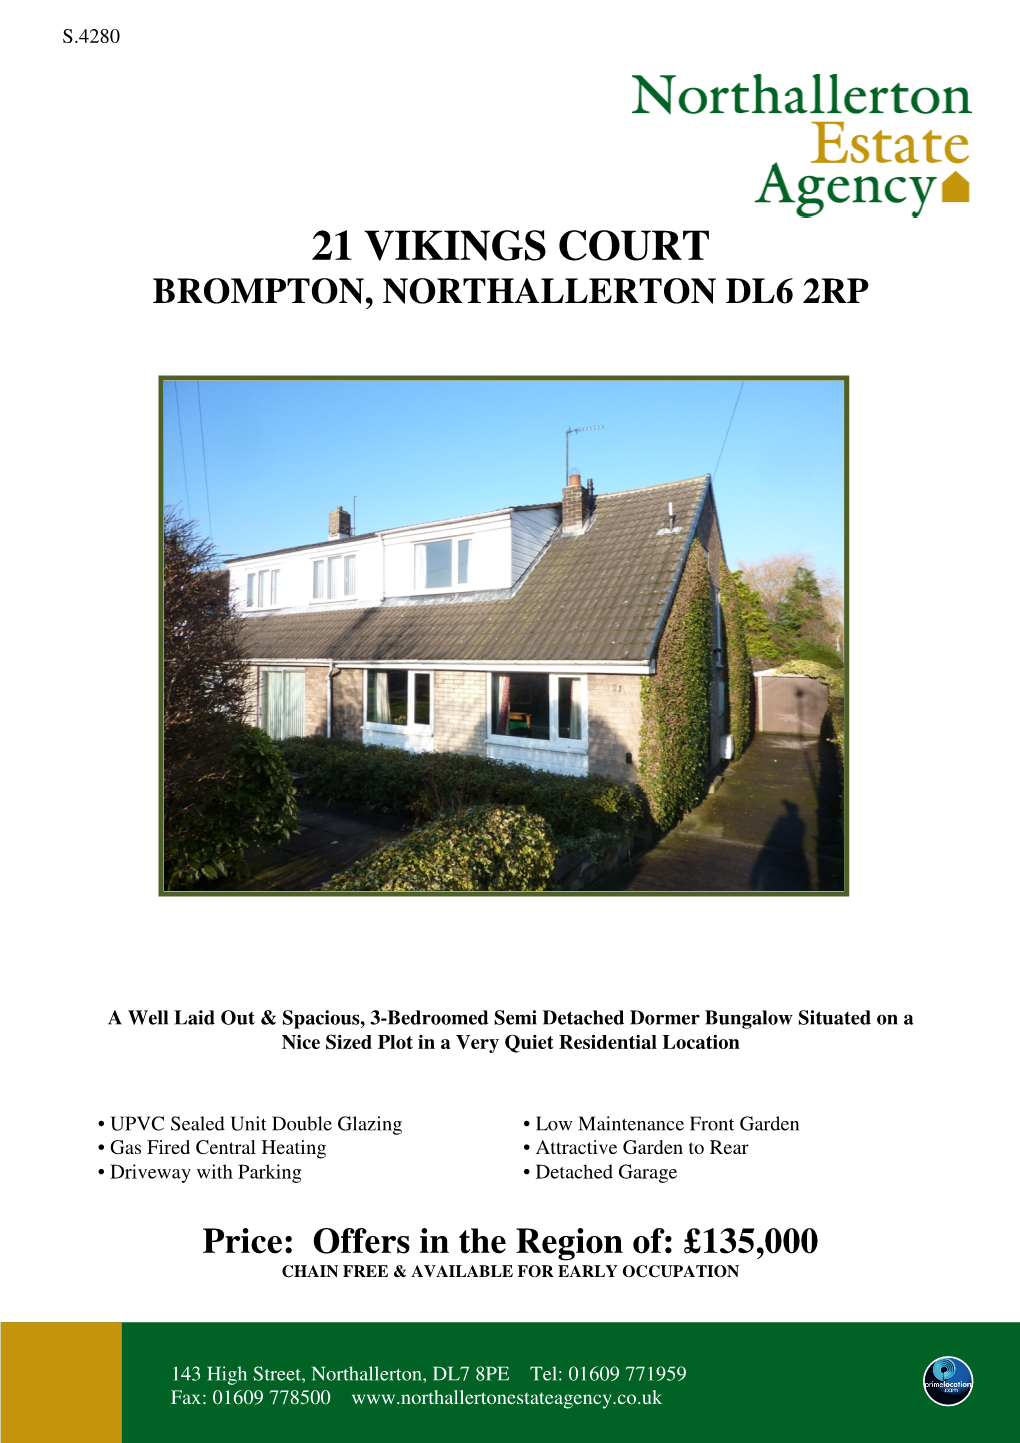 21 Vikings Court Brompton, Northallerton Dl6 2Rp